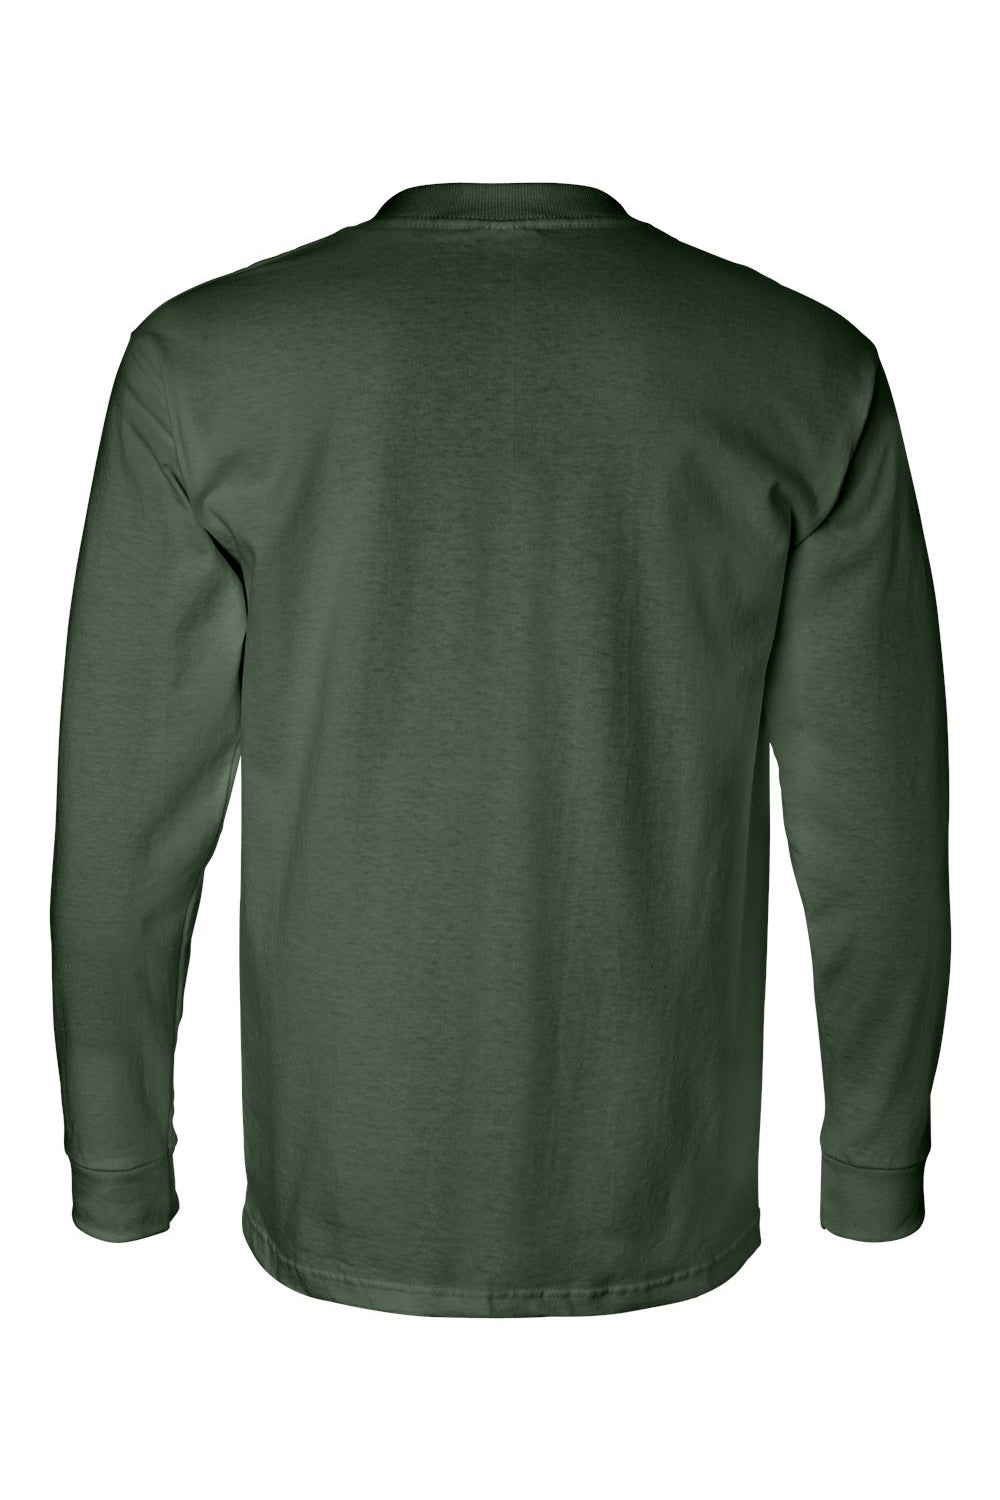 Bayside BA8100 Mens USA Made Long Sleeve Crewneck T-Shirt w/ Pocket Forest Green Flat Back